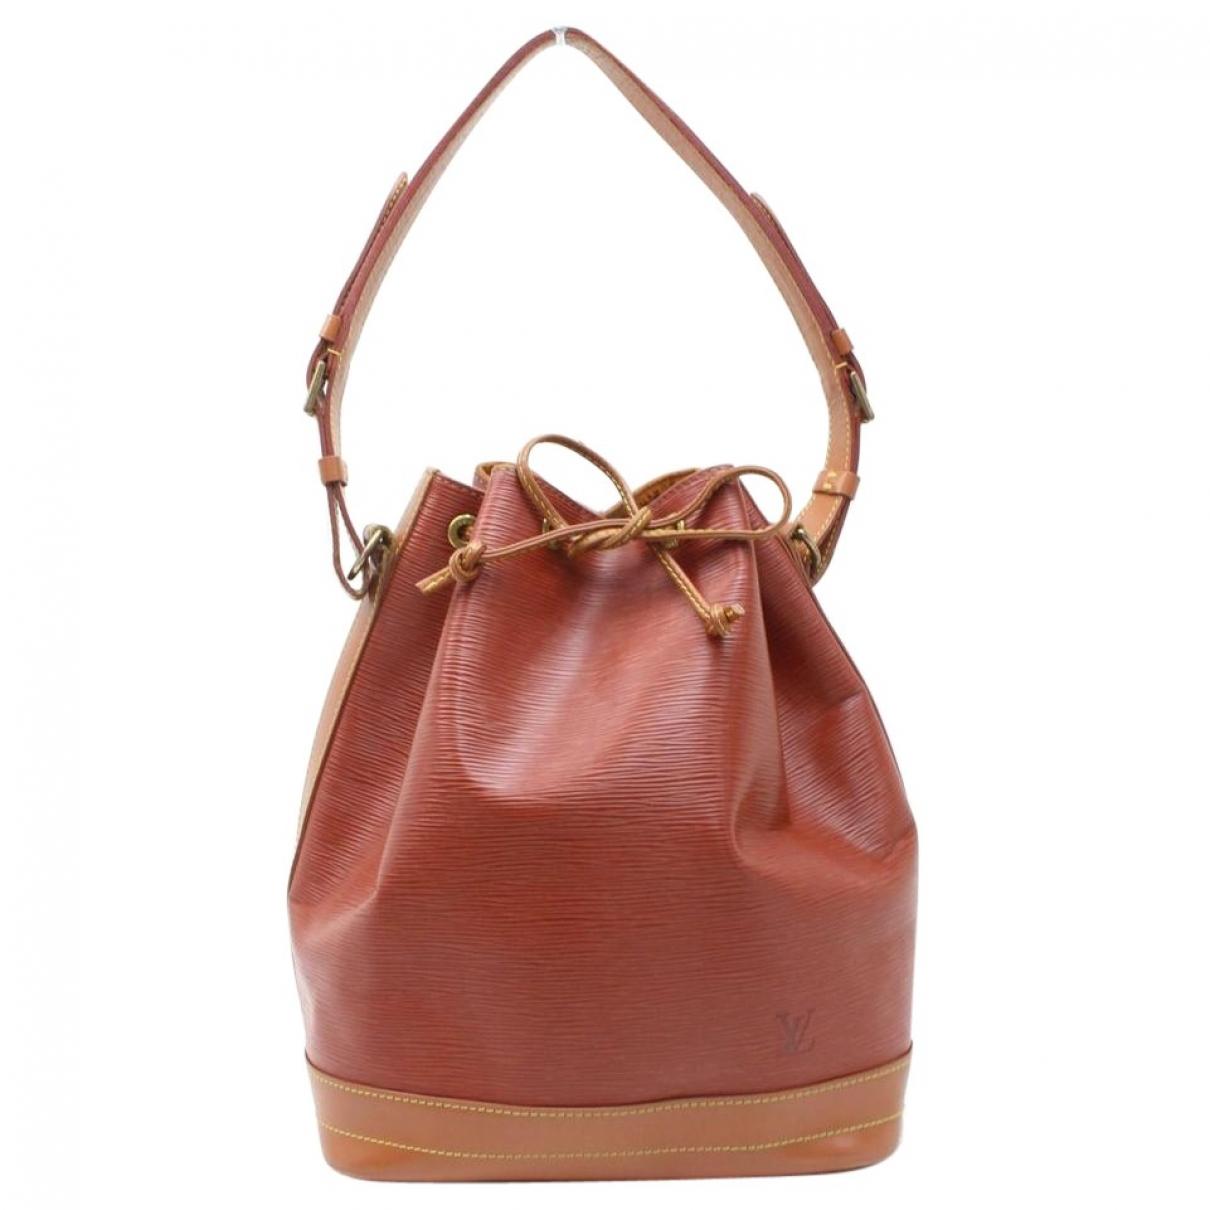 Lyst - Louis Vuitton Brown Leather Handbag in Brown